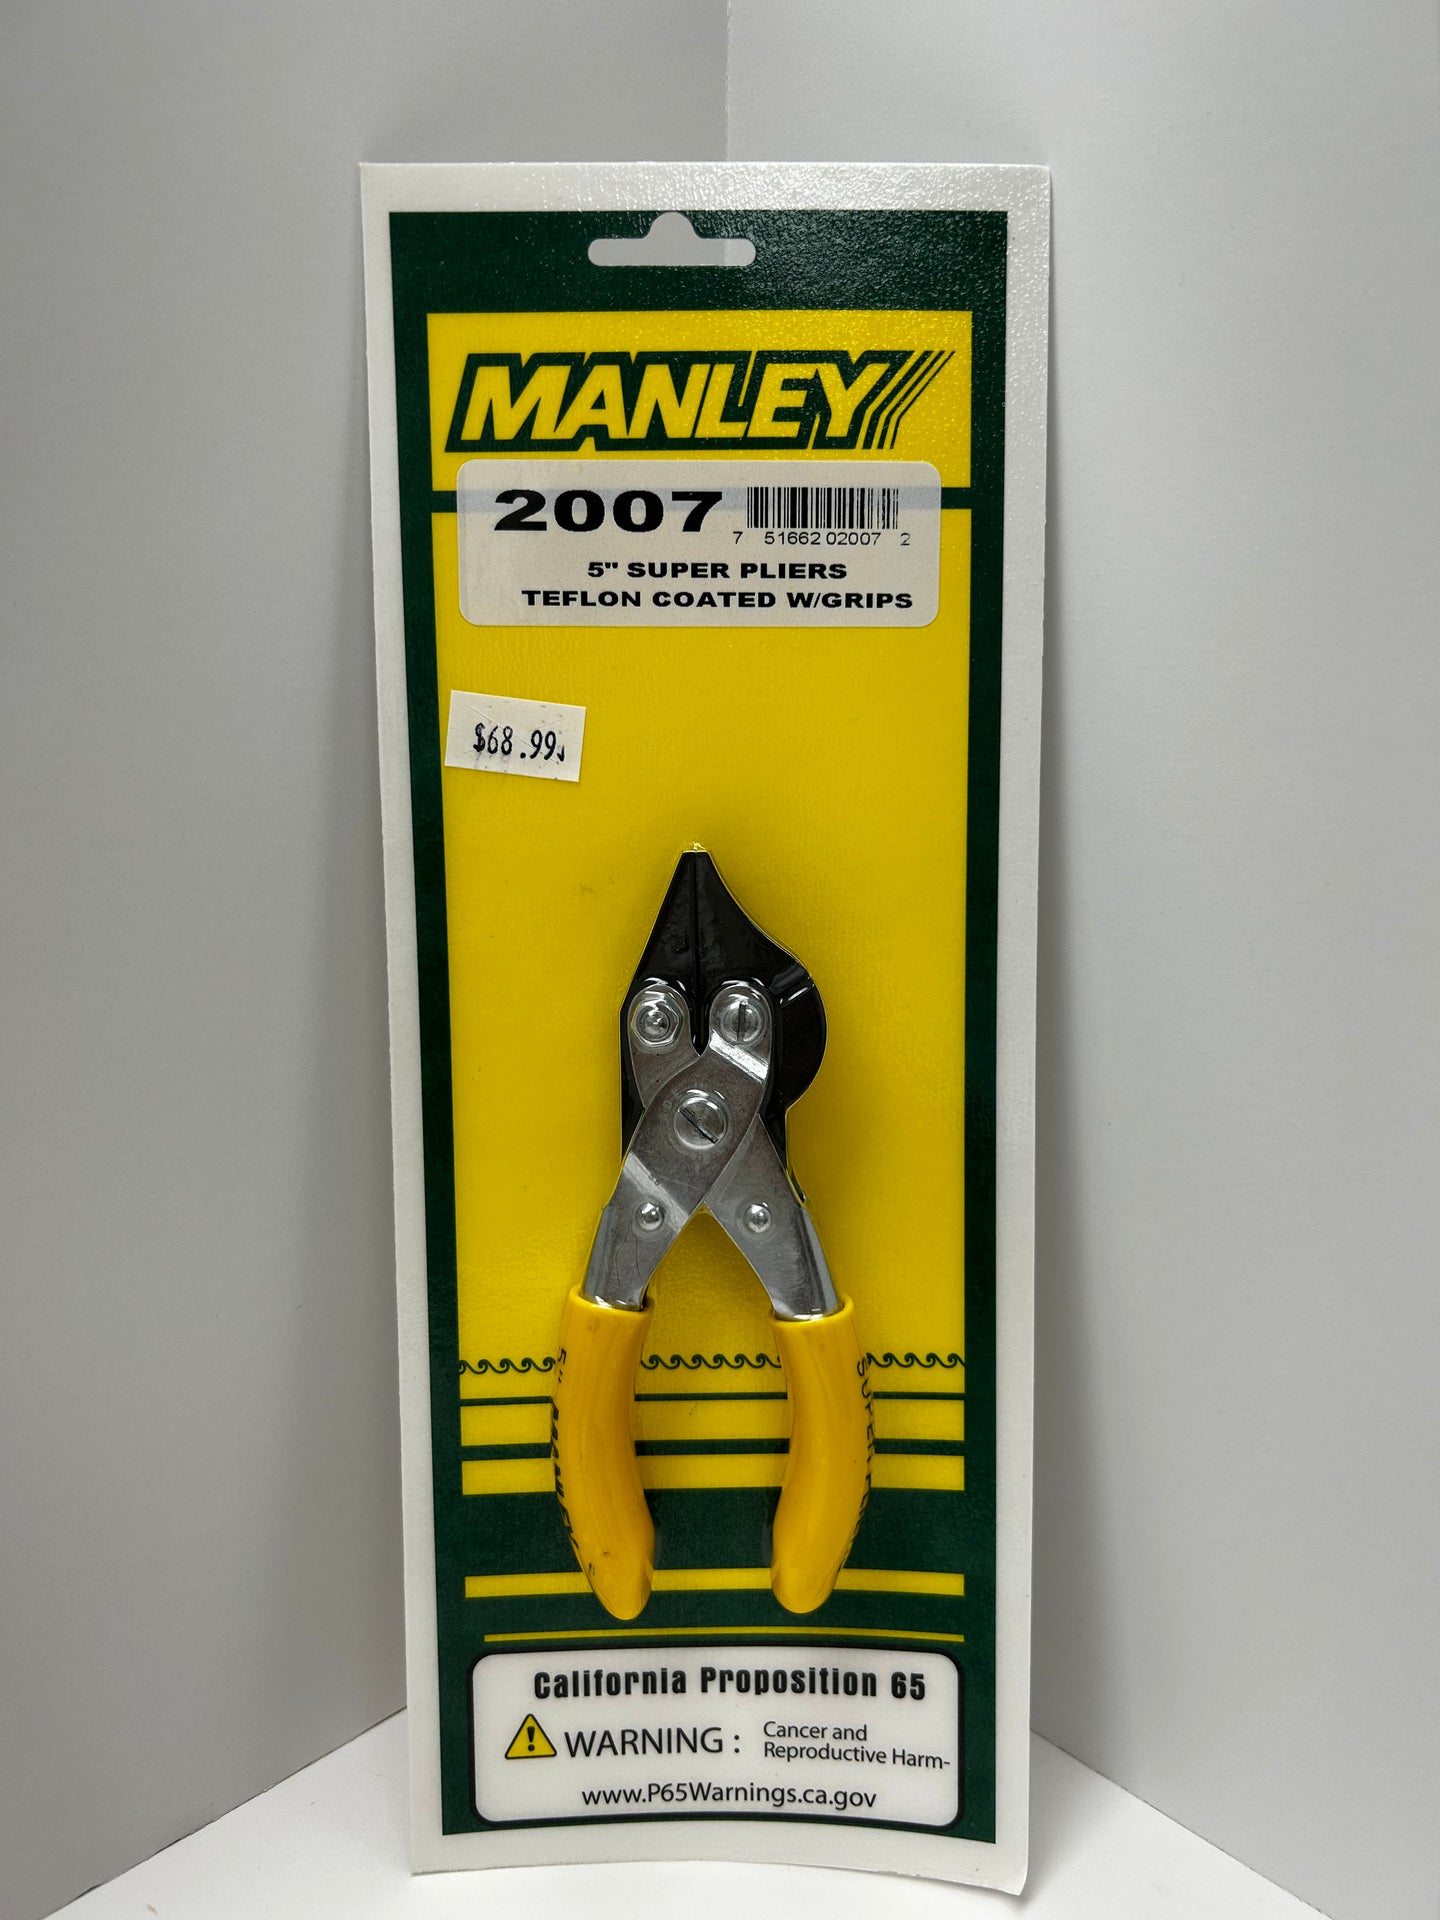 MANLEY 5” Super Pliers Teflon Coated w/ Grips